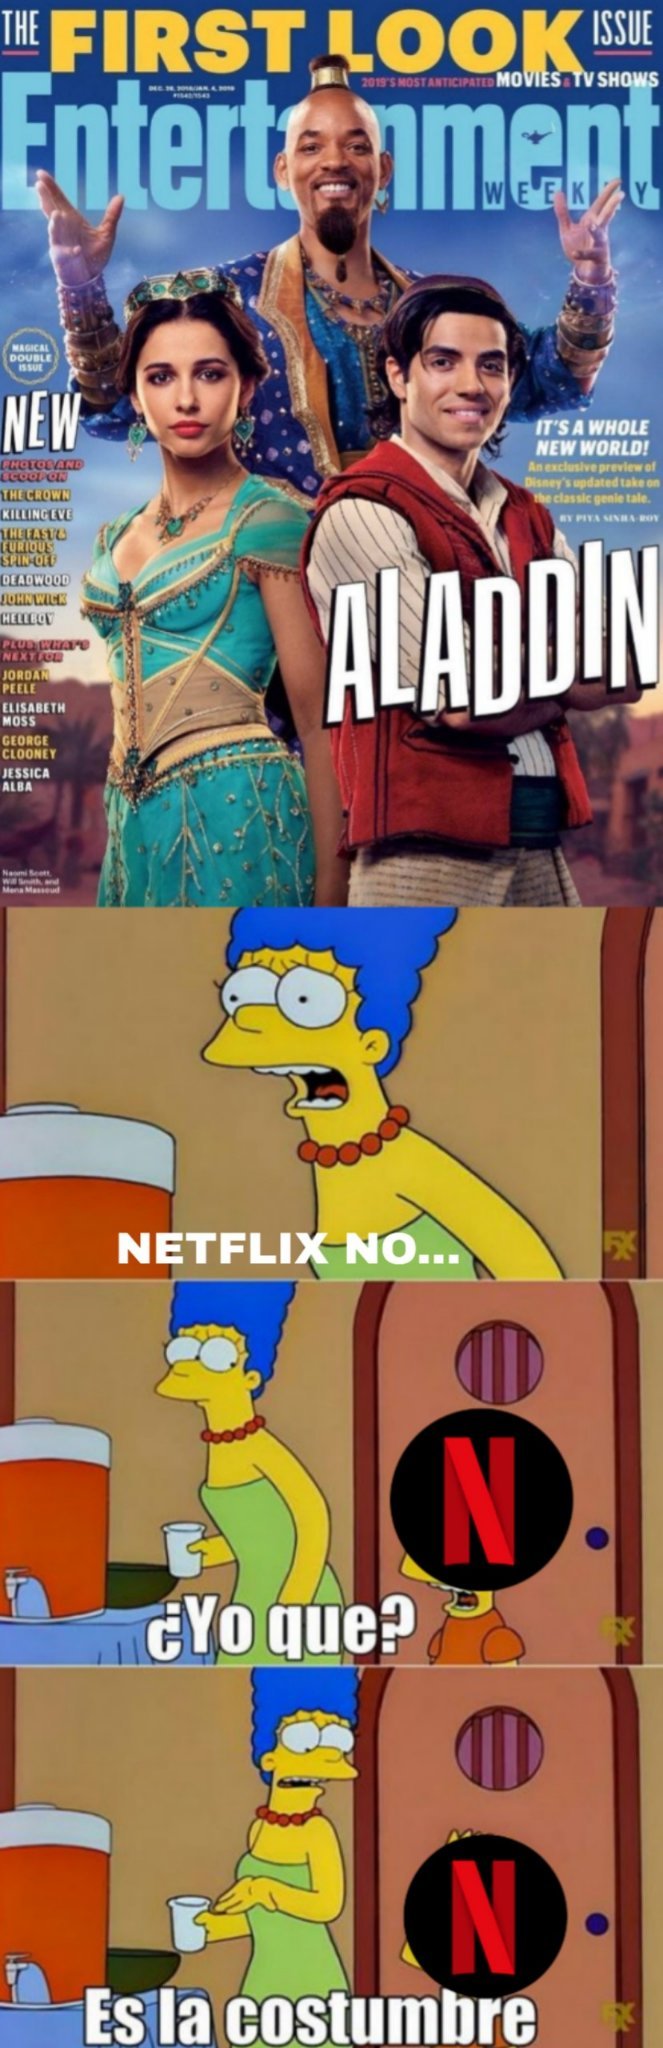 Netflix no!!! - meme